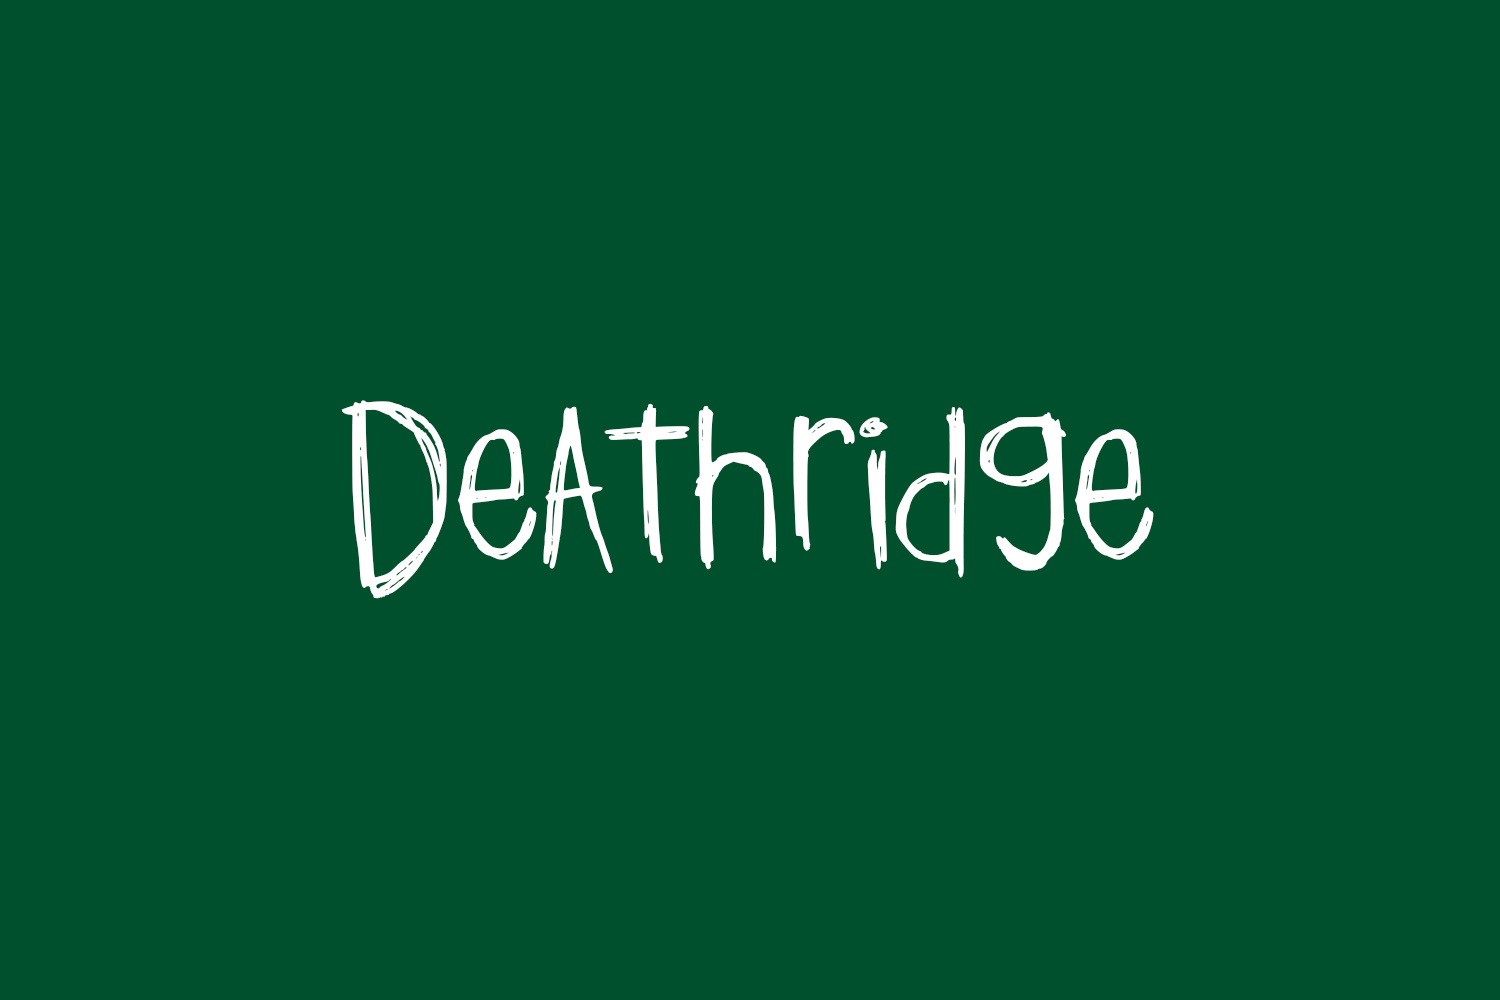 Deathridge Free Font